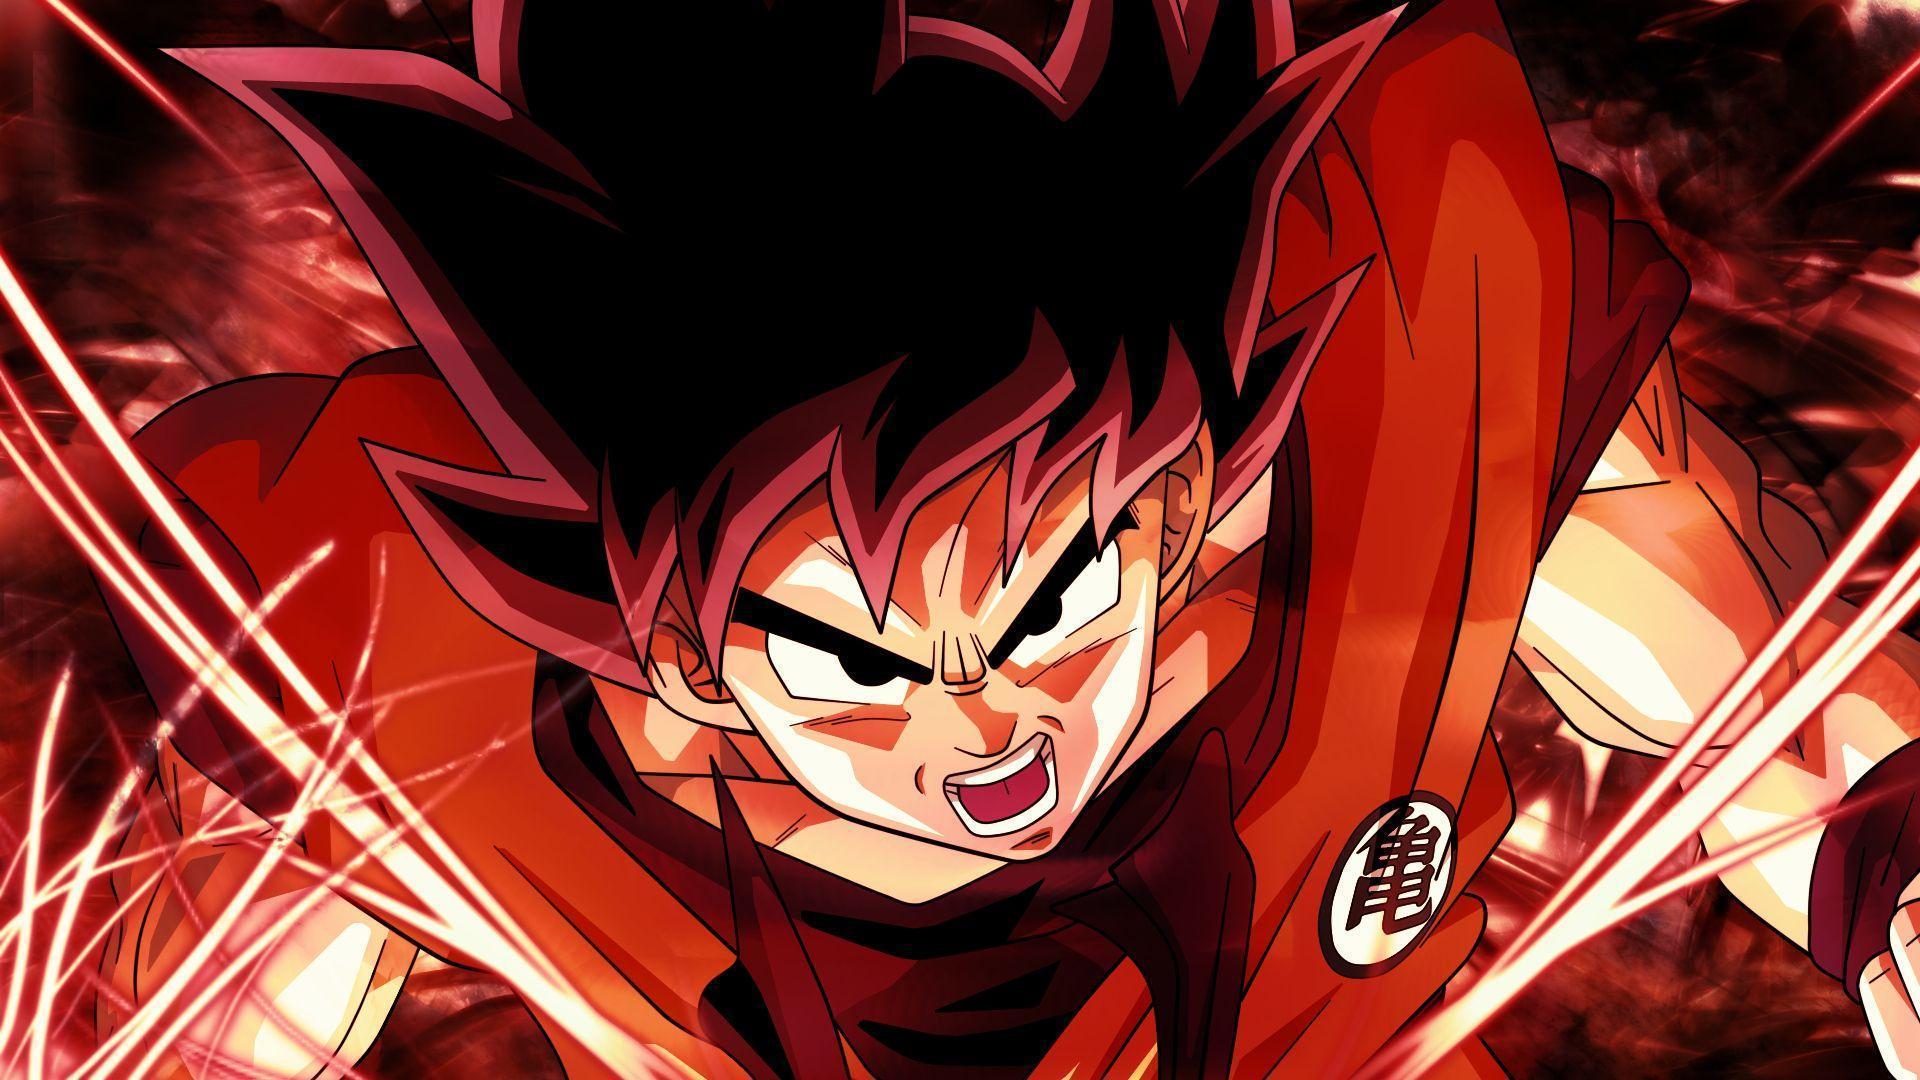 Cartoon Wallpaper: Goku Super Saiyan God Wallpapers Full HD with